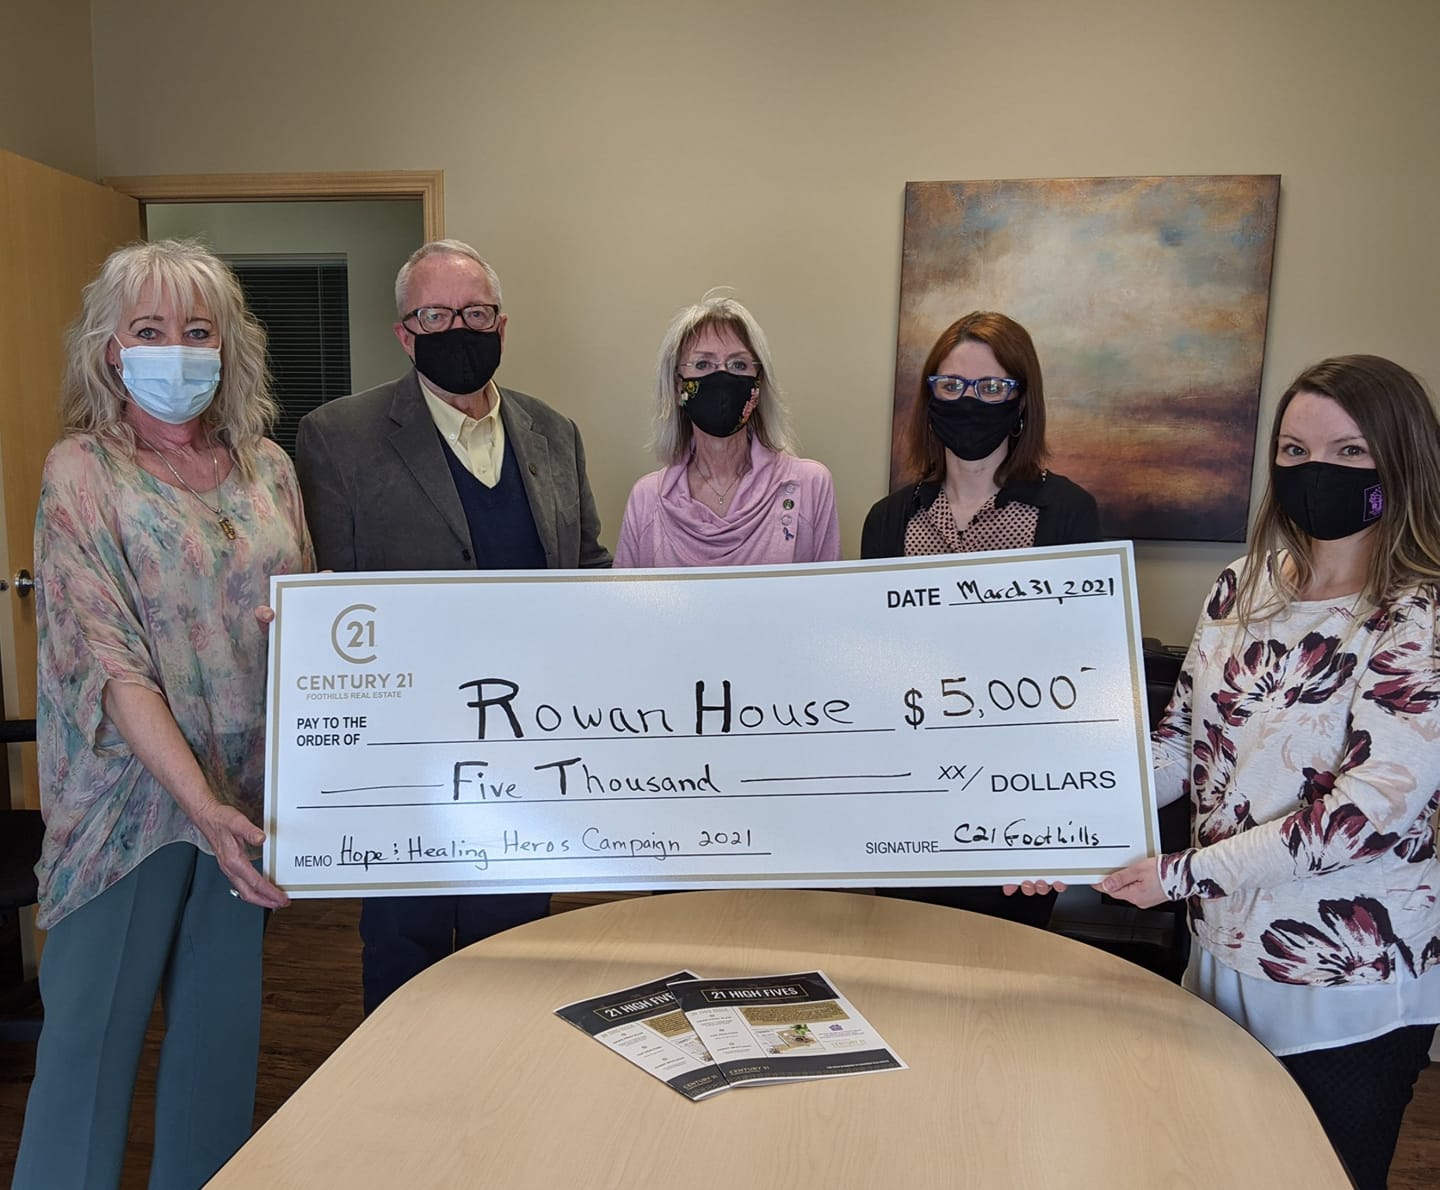 Rowan House Hope & Healing Heroes